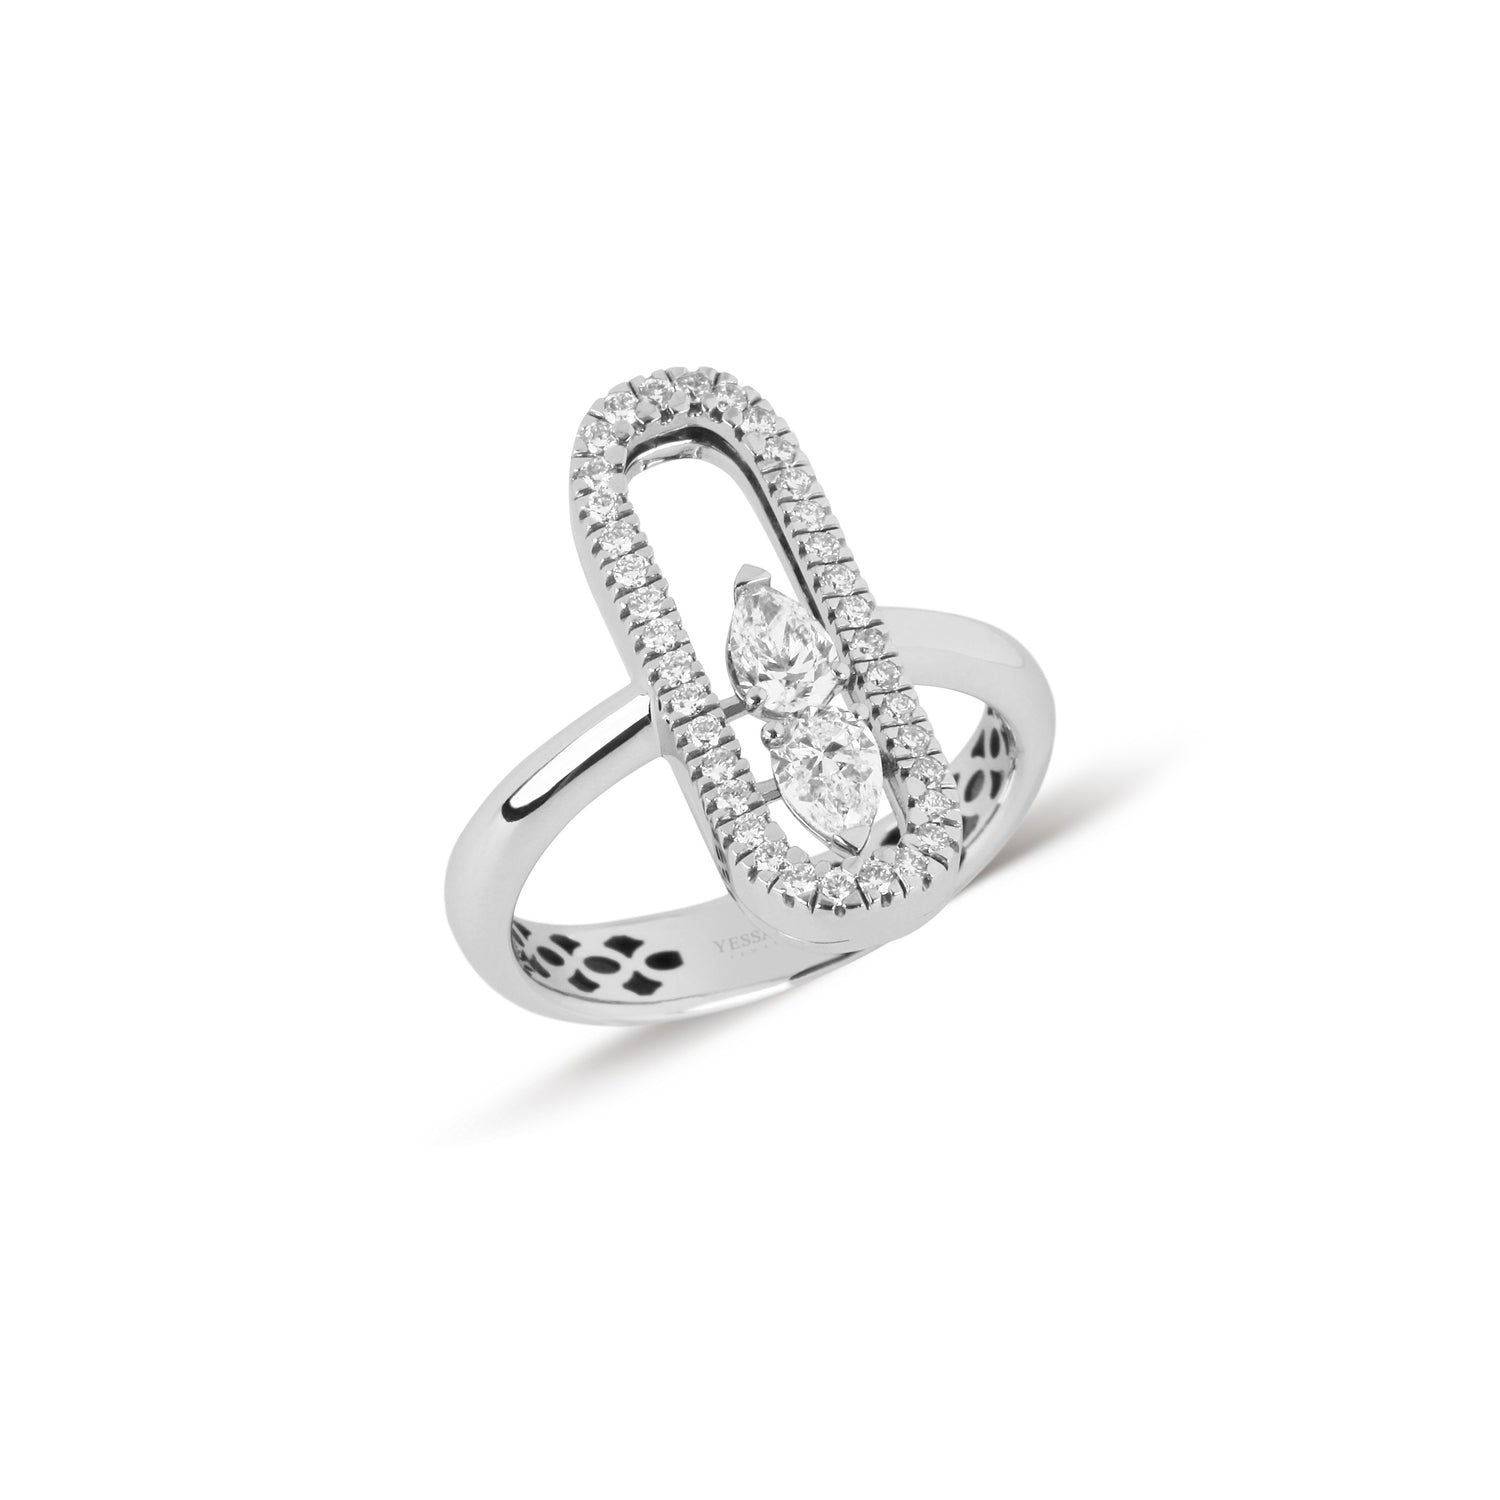 Diamond Slider Ring | jewellery store | diamond rings